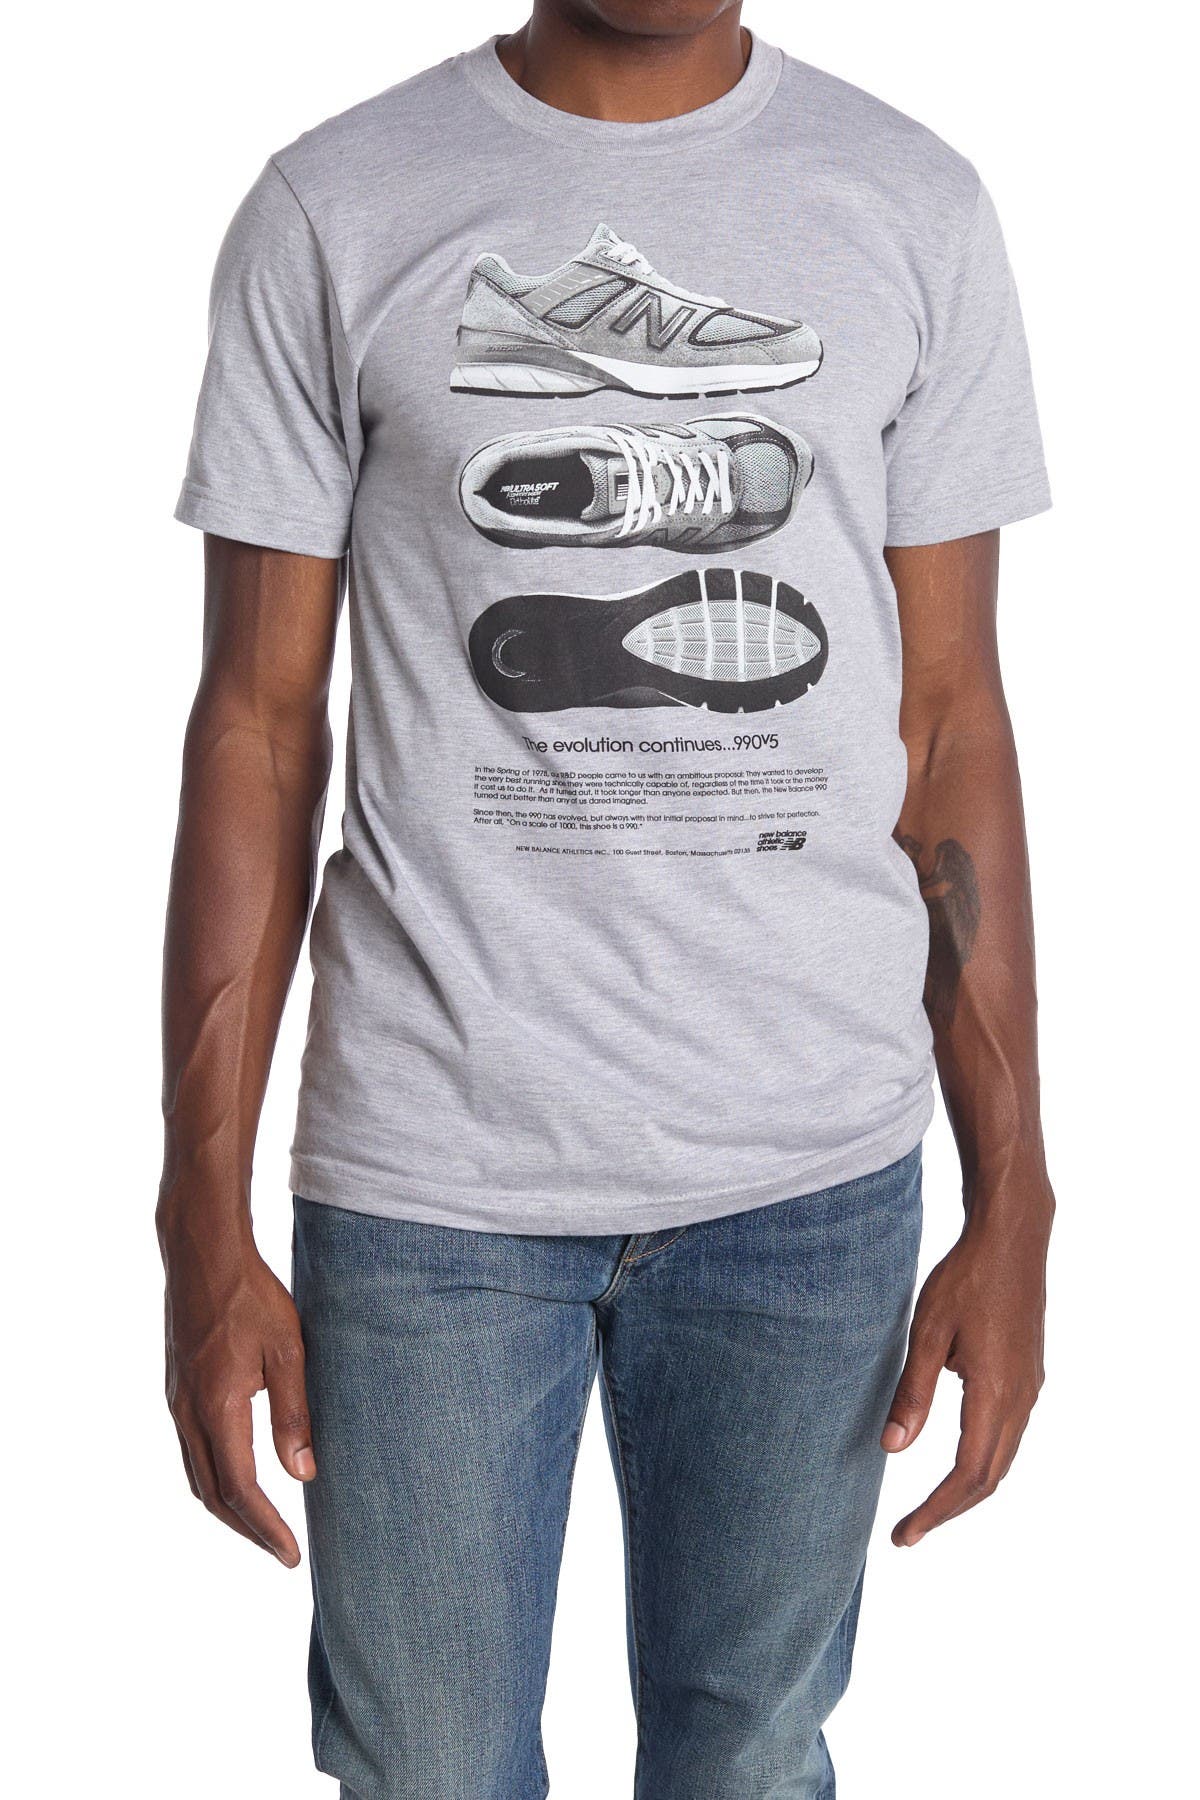 Anoi new balance 990 t shirt 